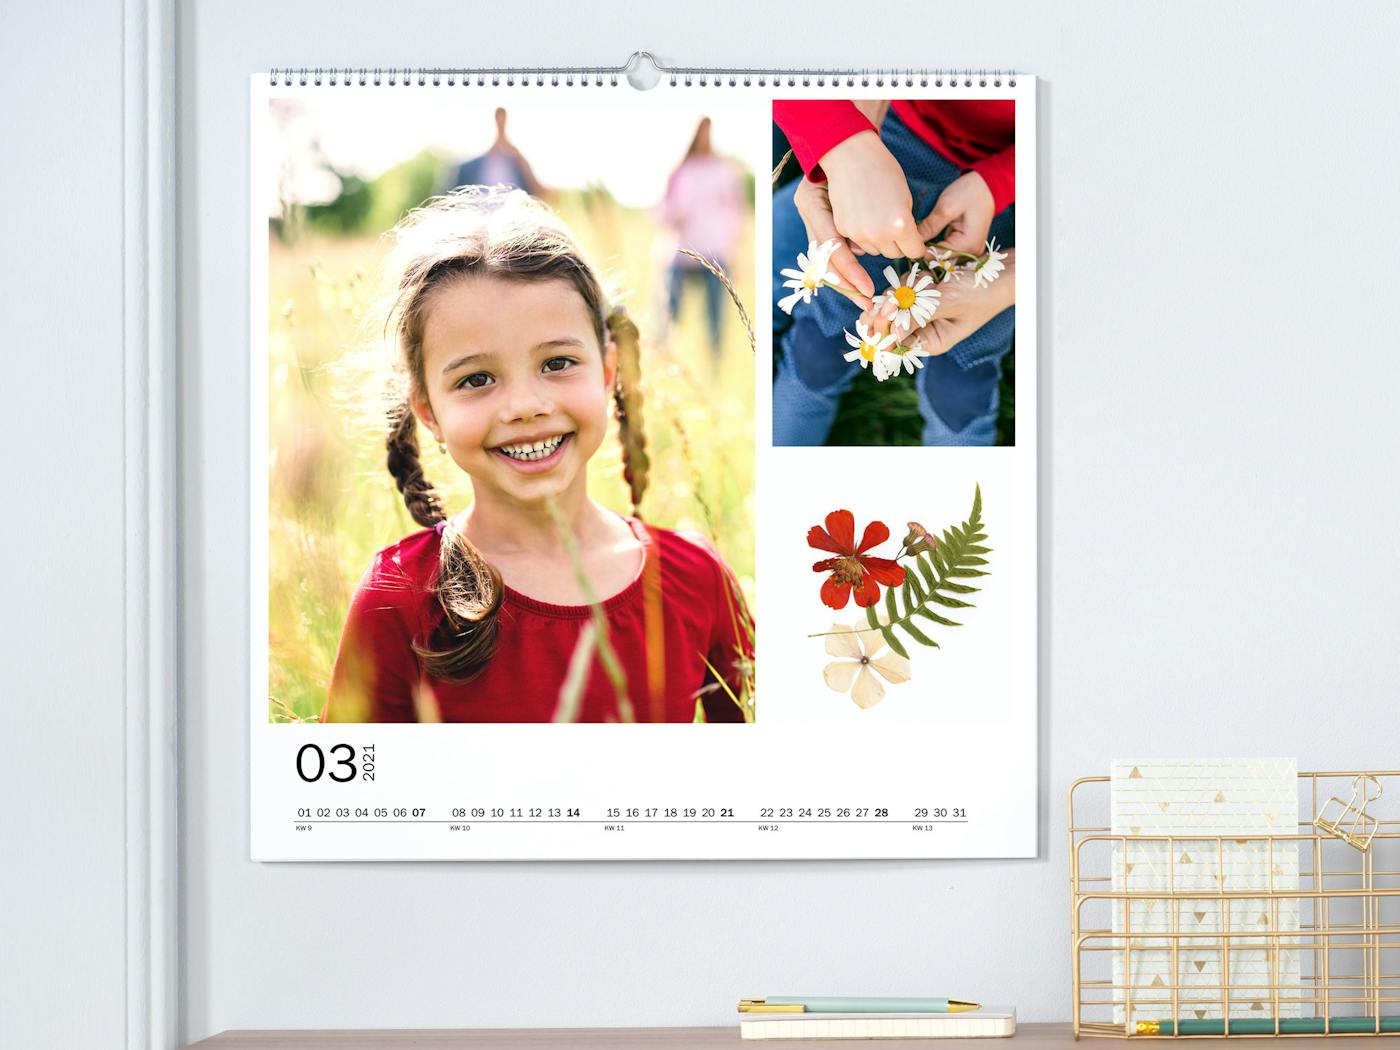 Crea tu calendario con collages de forma creativa